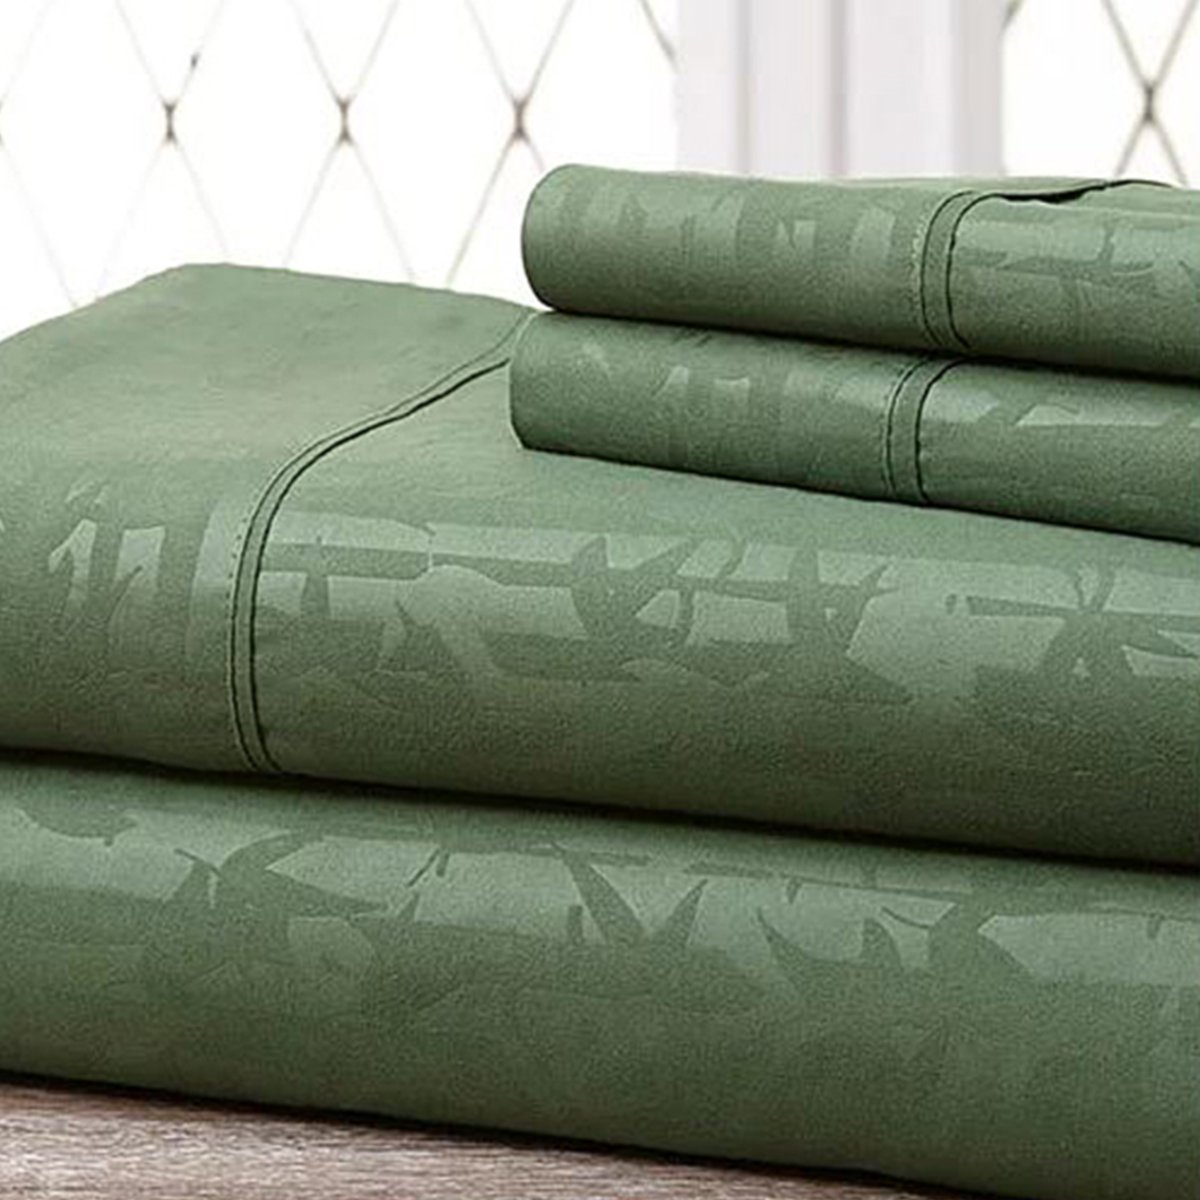 Hny-4pc-eb-hun-k Super-soft 1600 Series Bamboo Embossed Bed Sheet, Hunter - King, 4 Piece